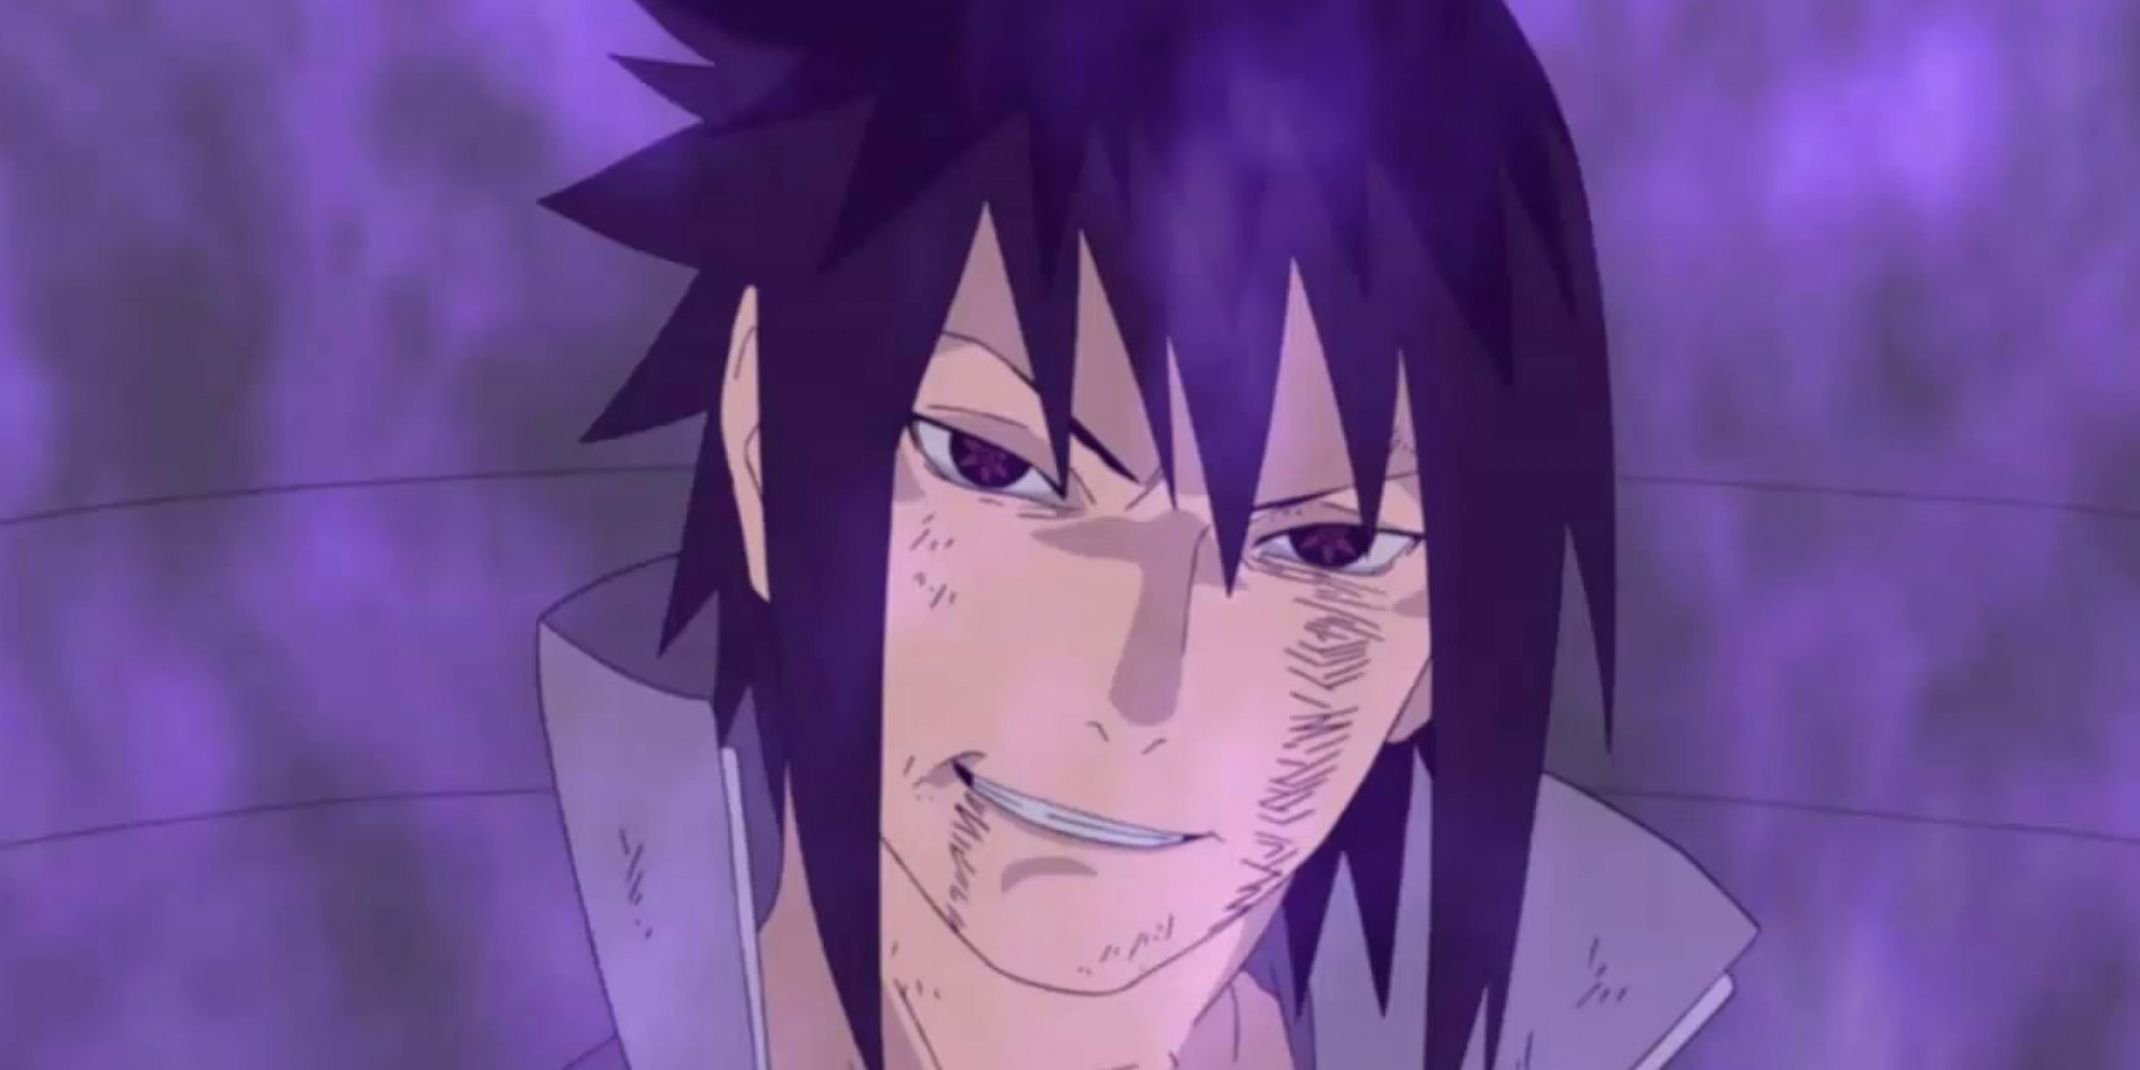 Sasuke smiles evilly amid a purple haze in Naruto Shippuden